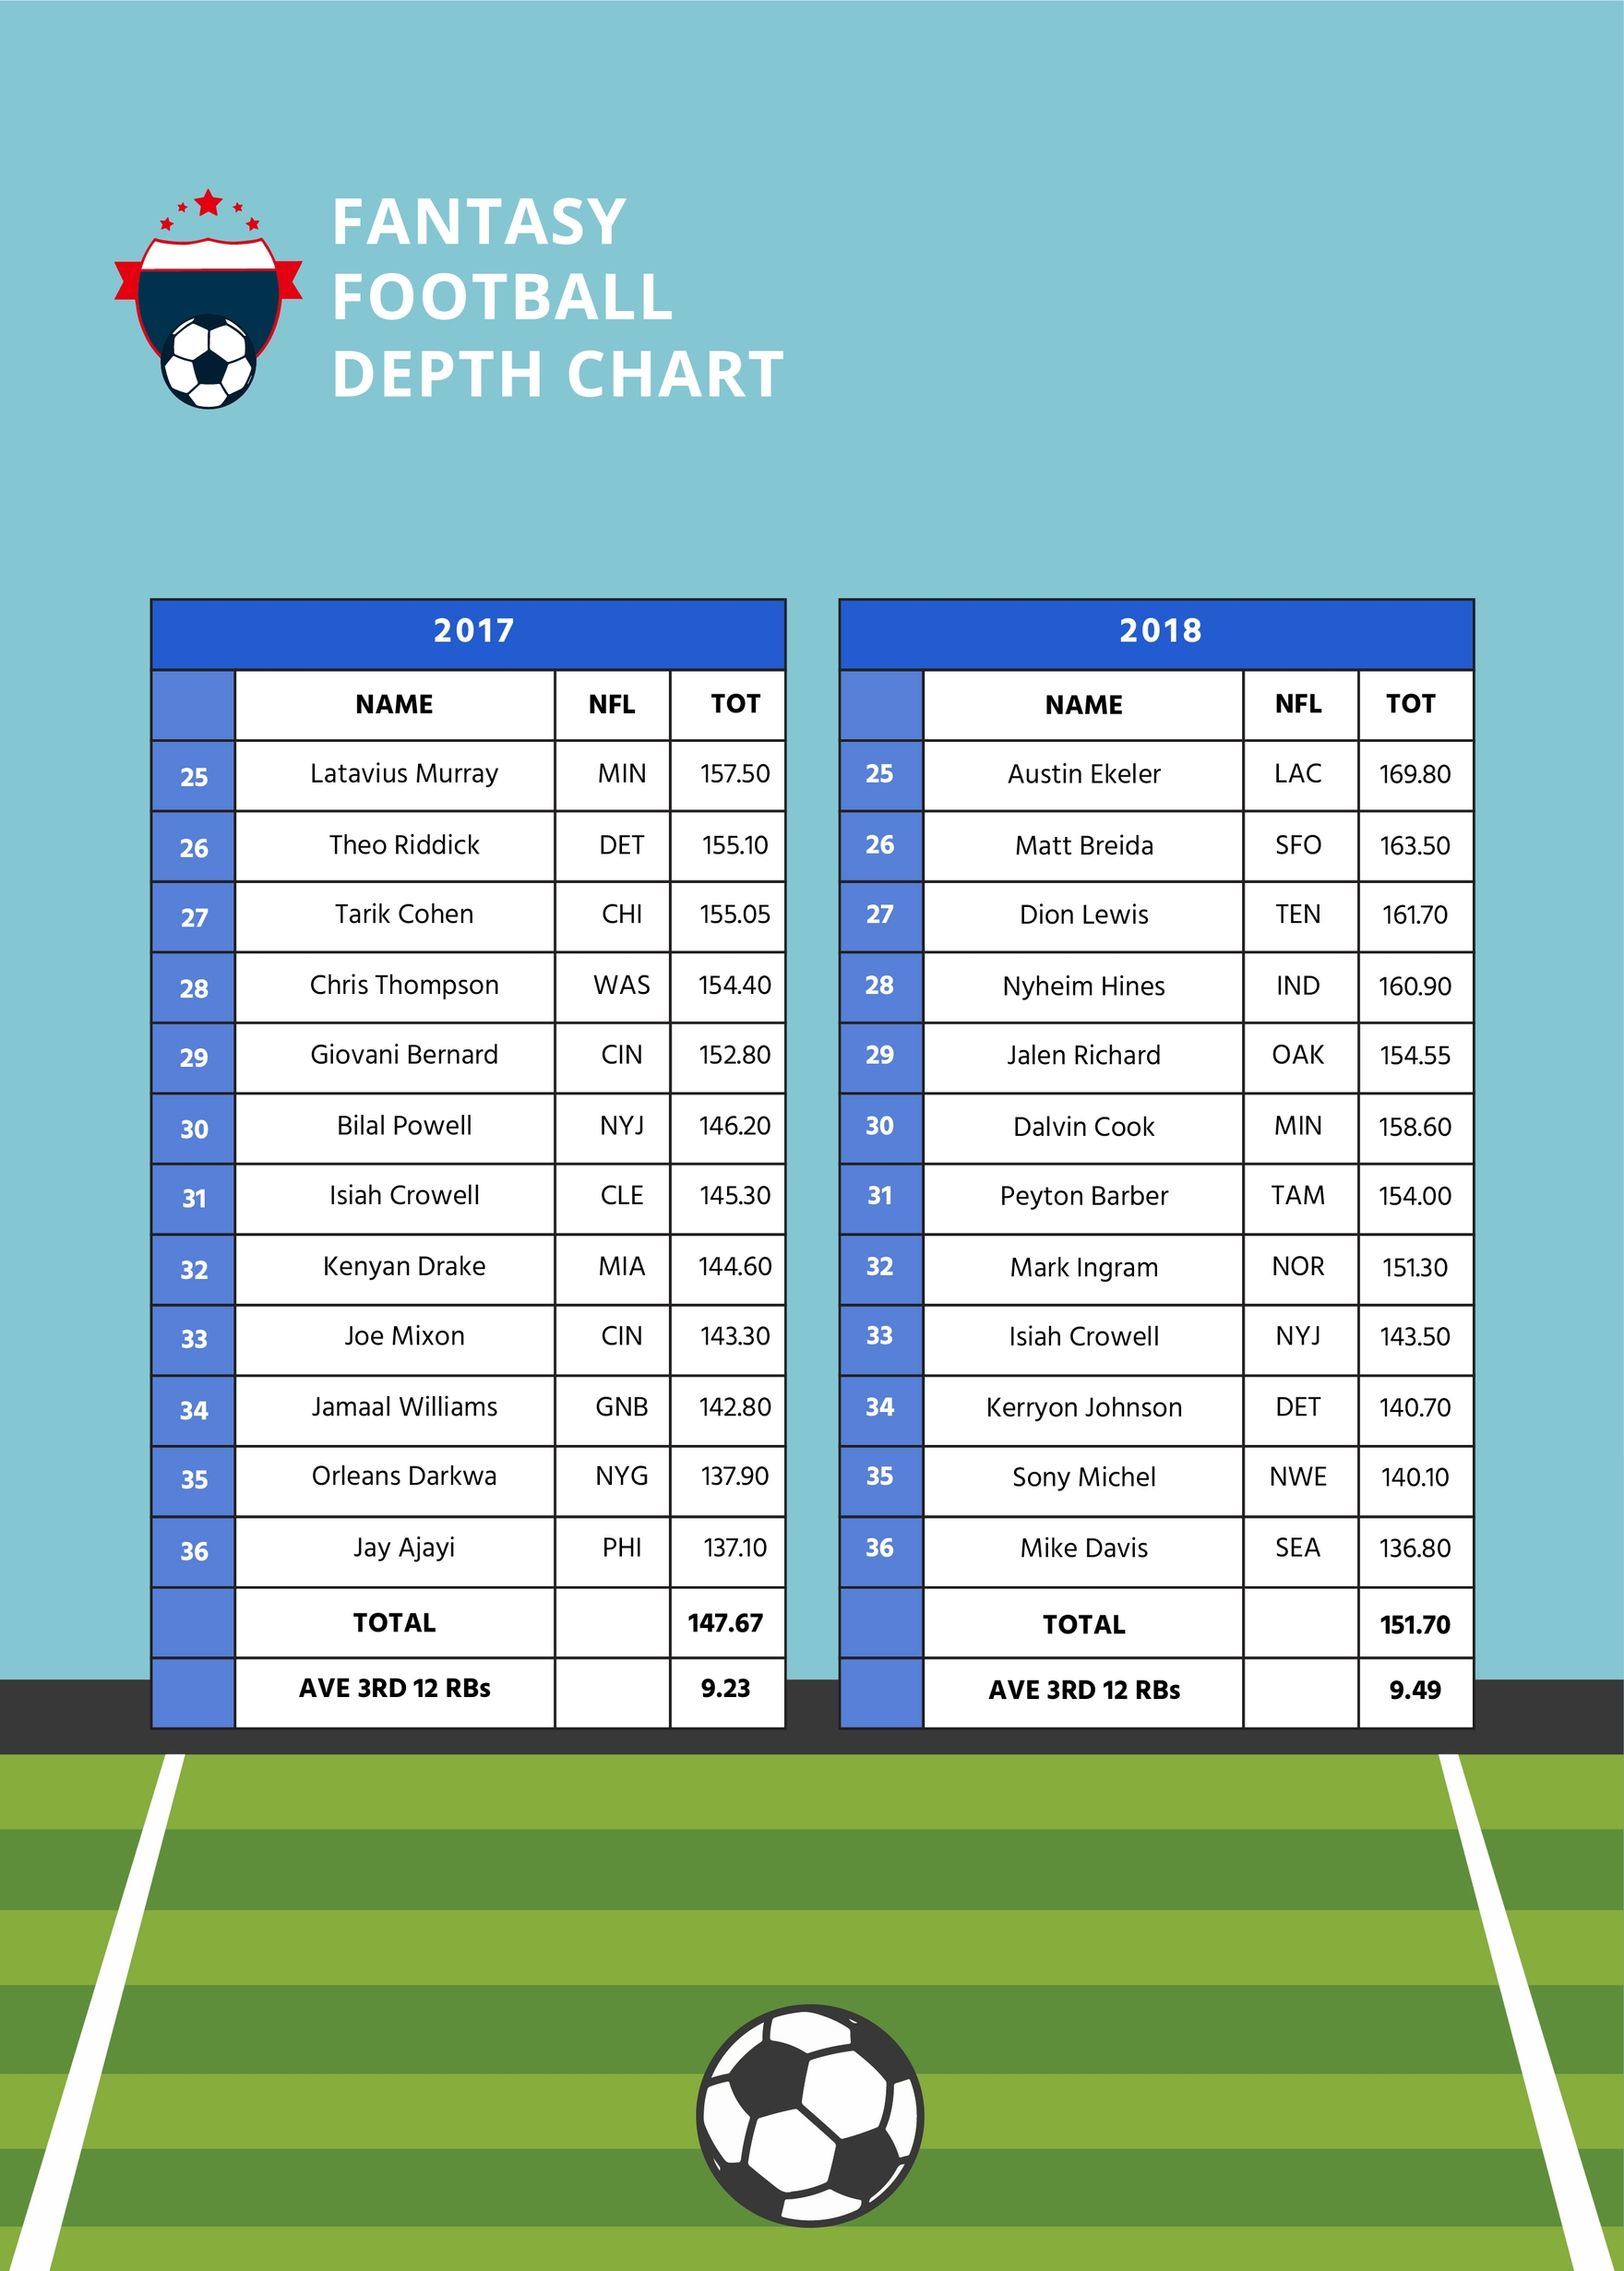 free-football-defensive-depth-chart-download-in-pdf-illustrator